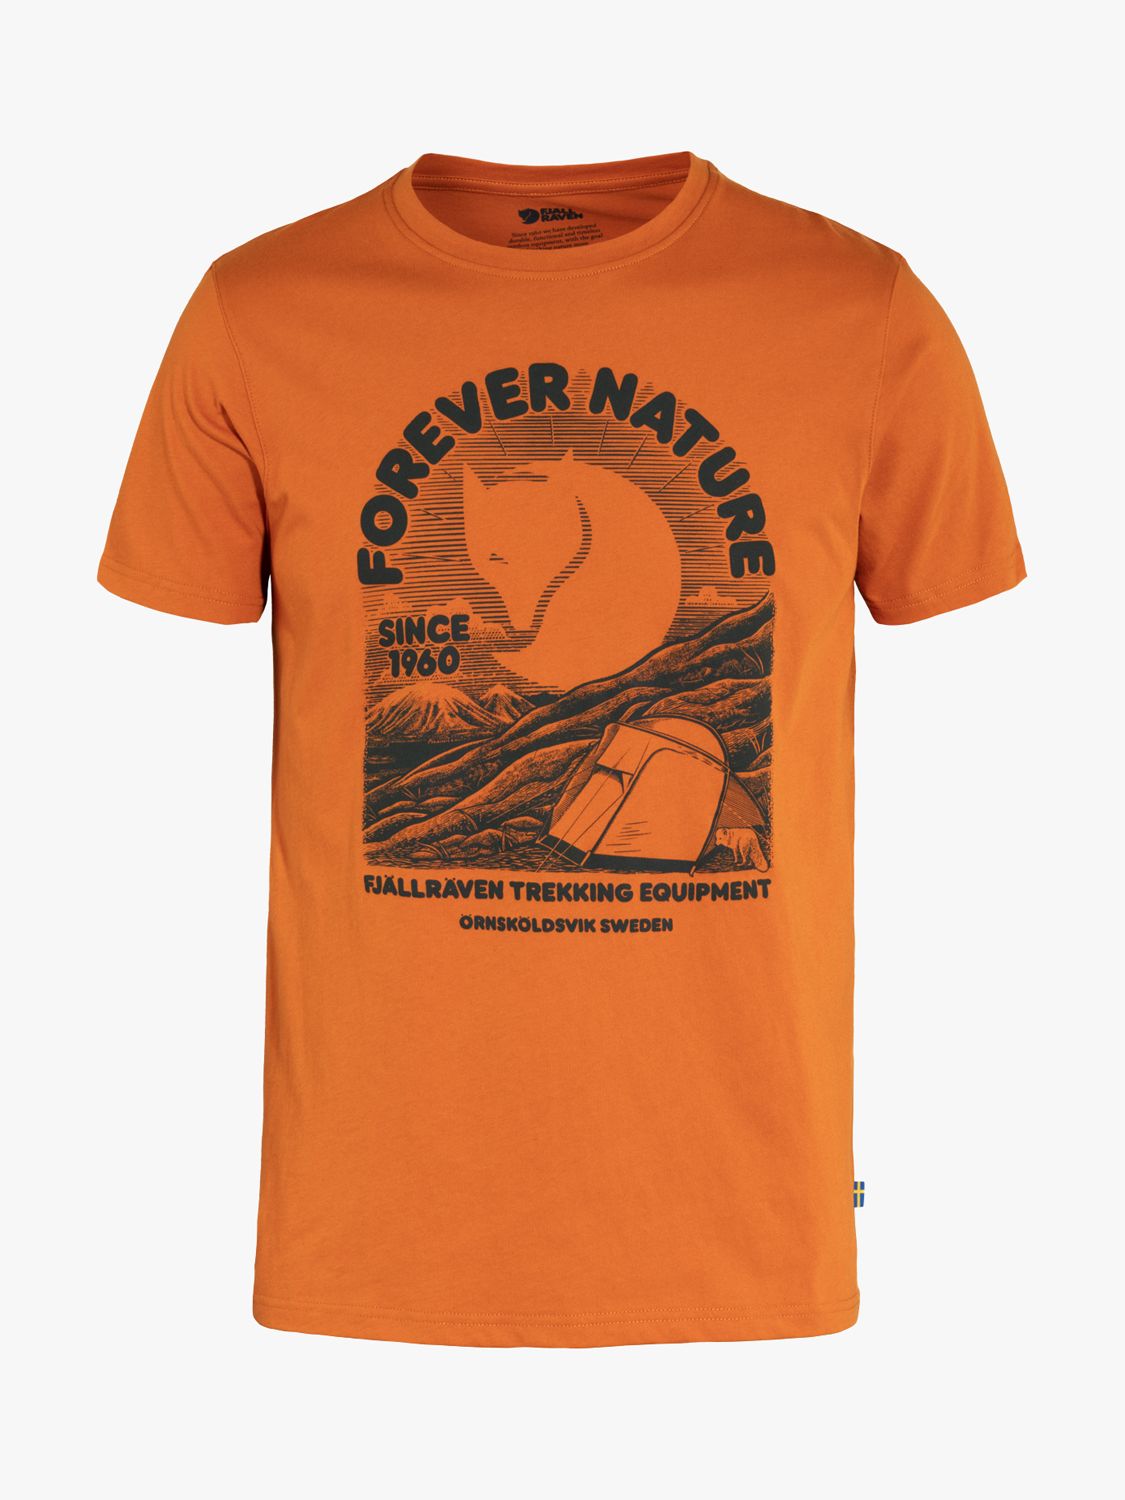 Buy Fjällräven Equipment Comfortable T-Shirt, Orange Online at johnlewis.com